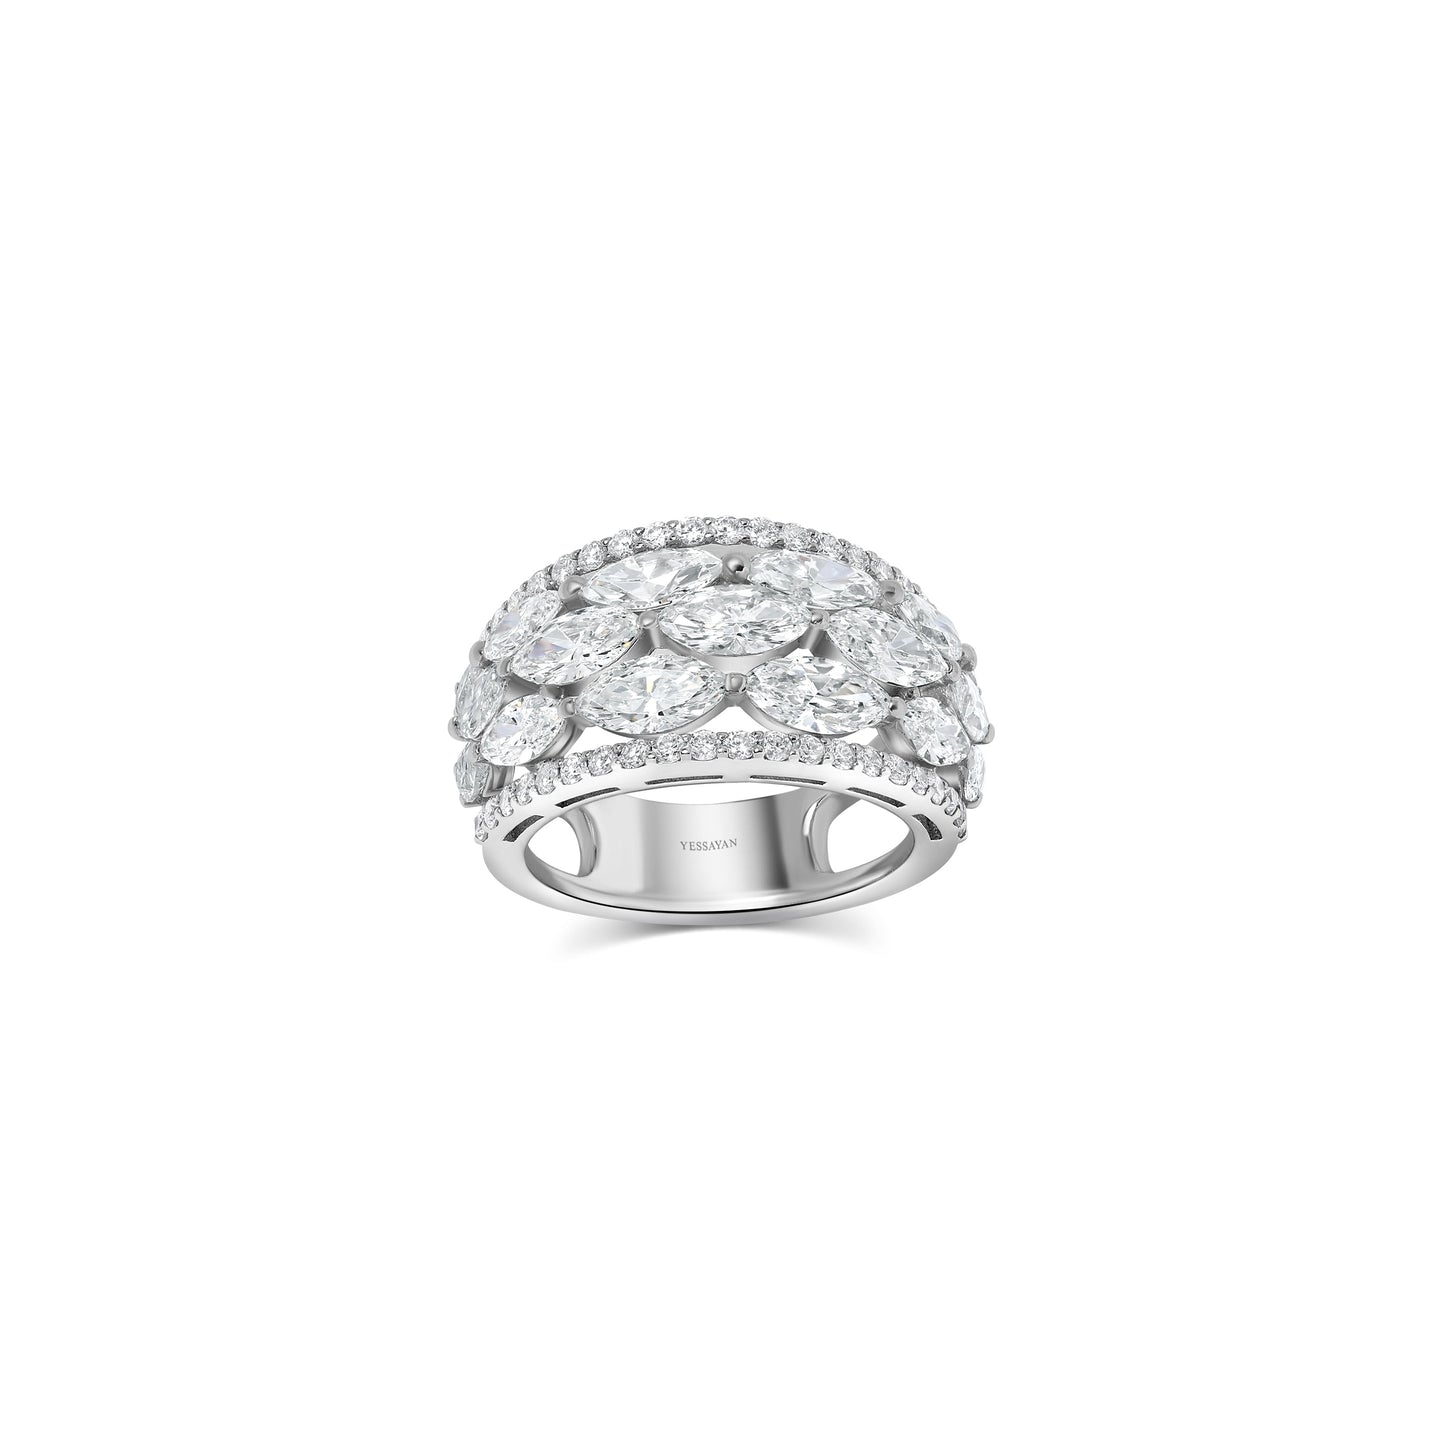 Aligned Marquise Diamond Ring